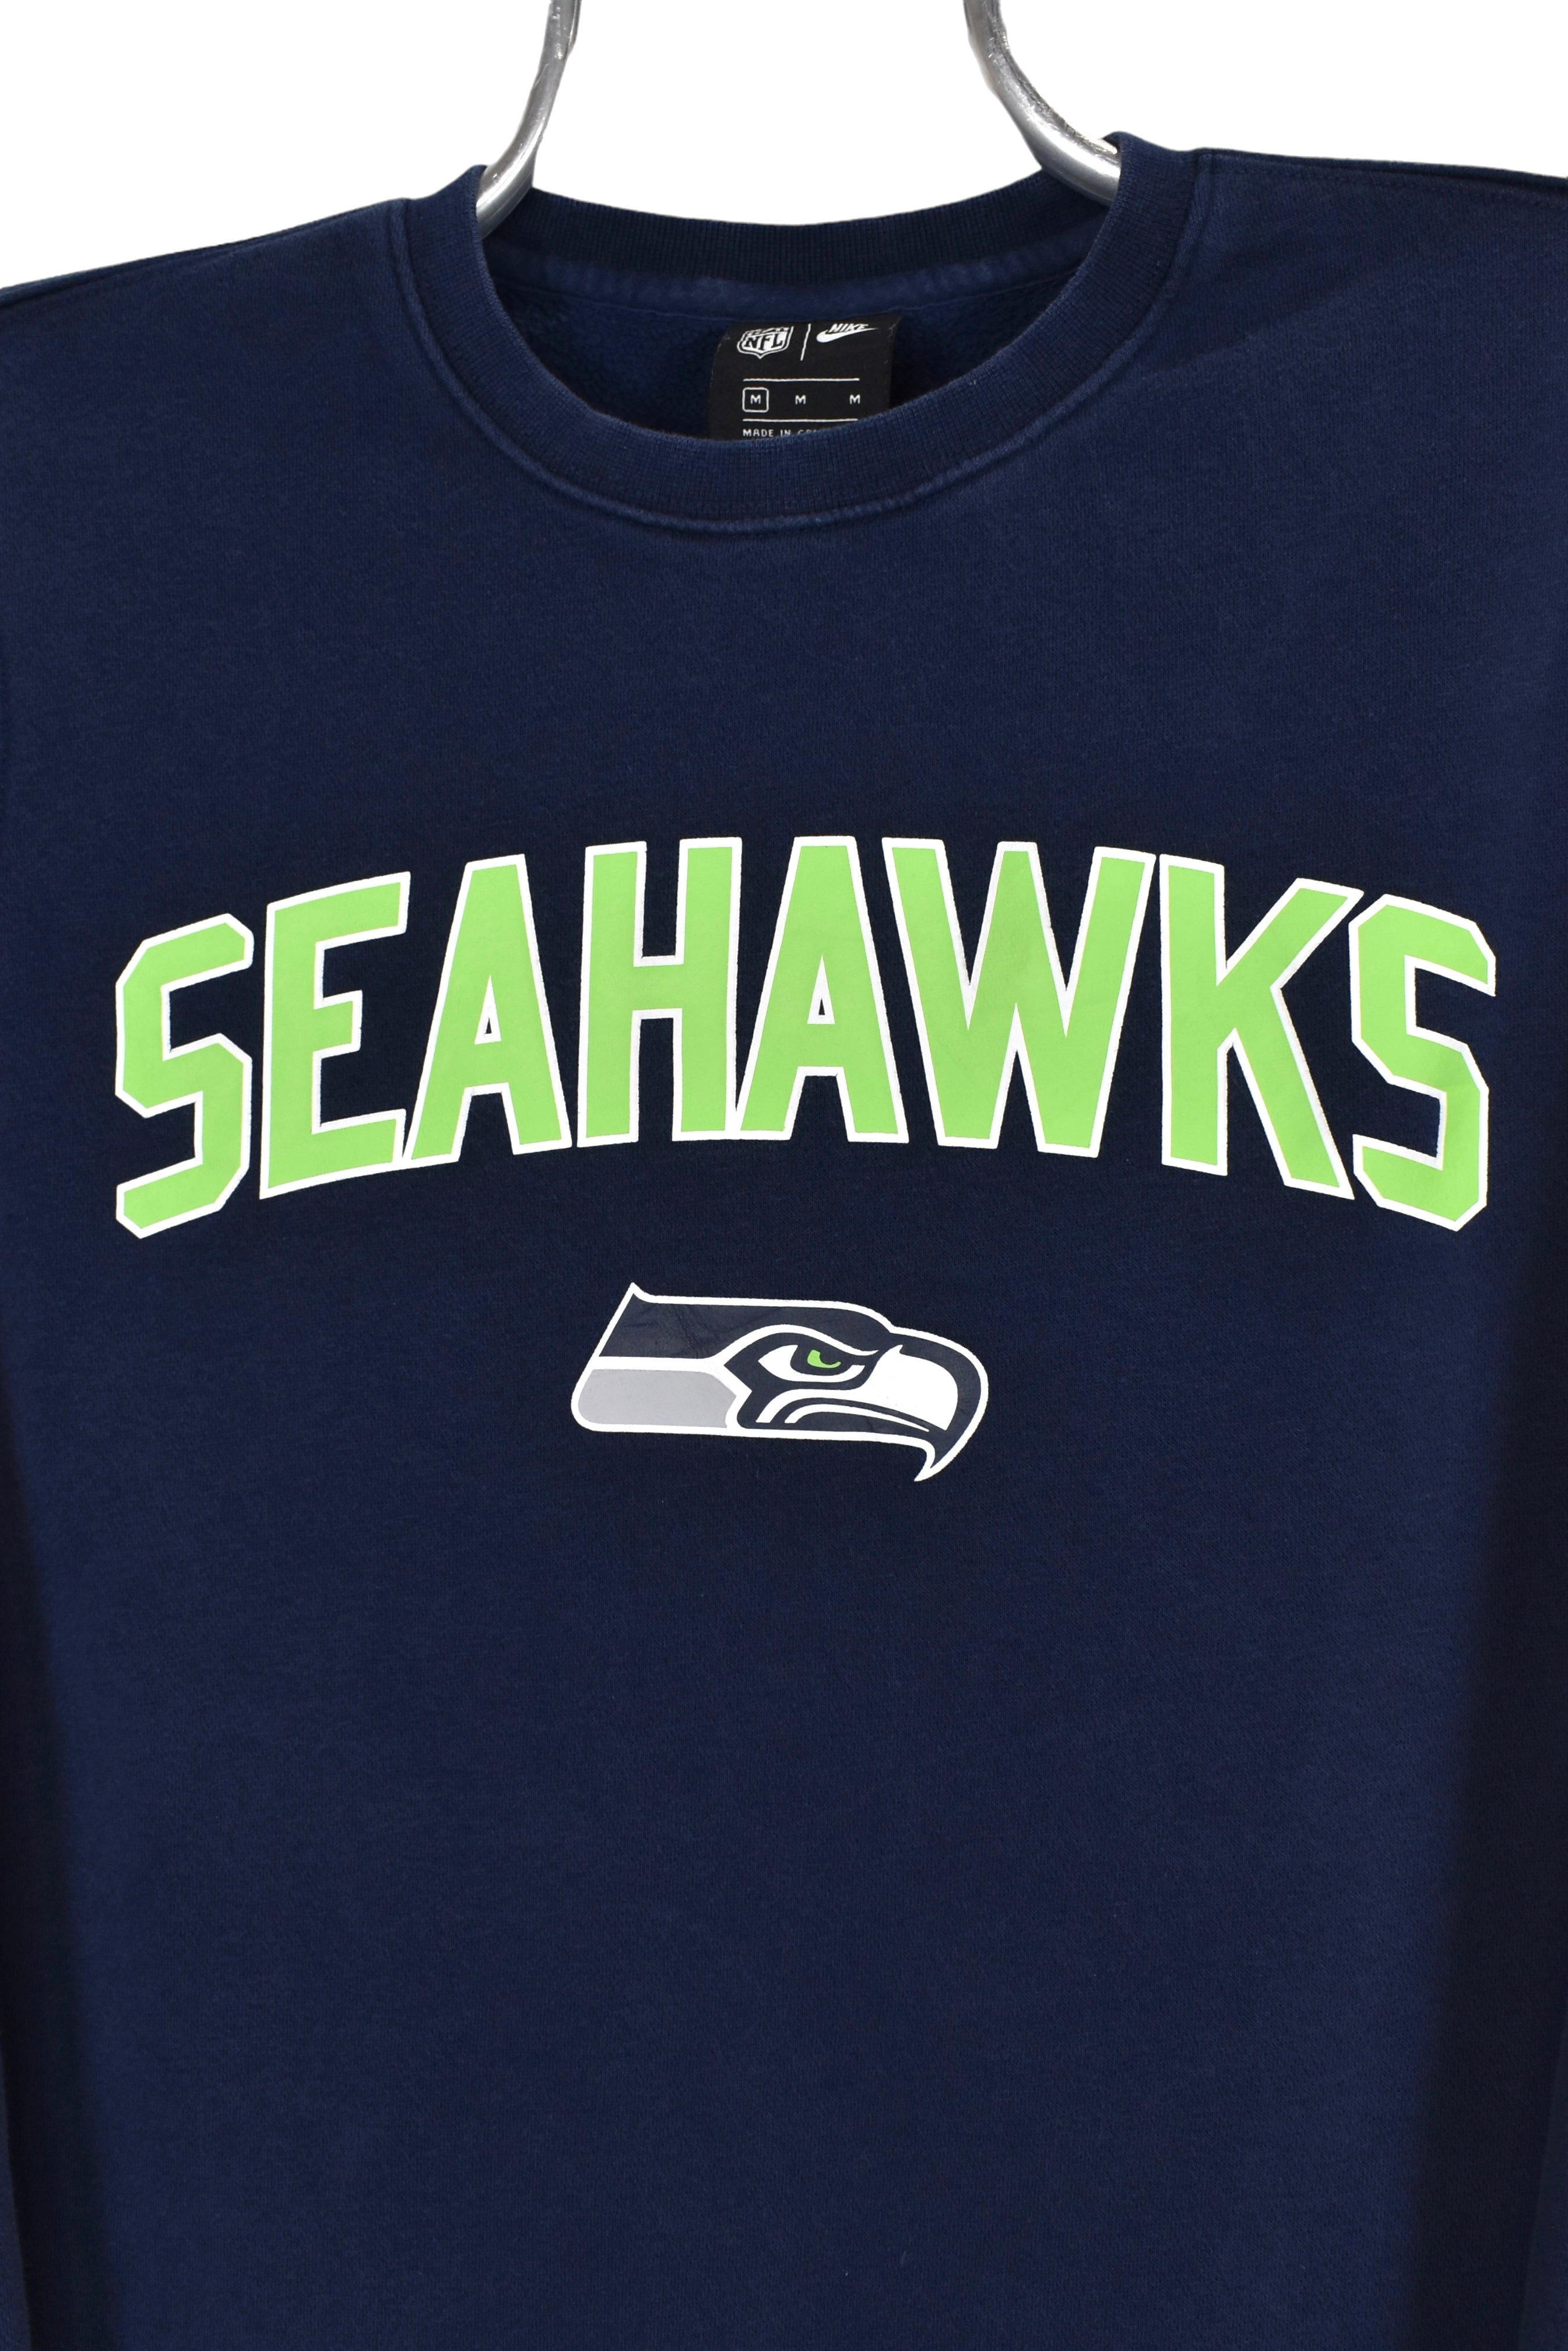 Vintage Seattle Seahawks sweatshirt (M), navy NFL graphic crewneck